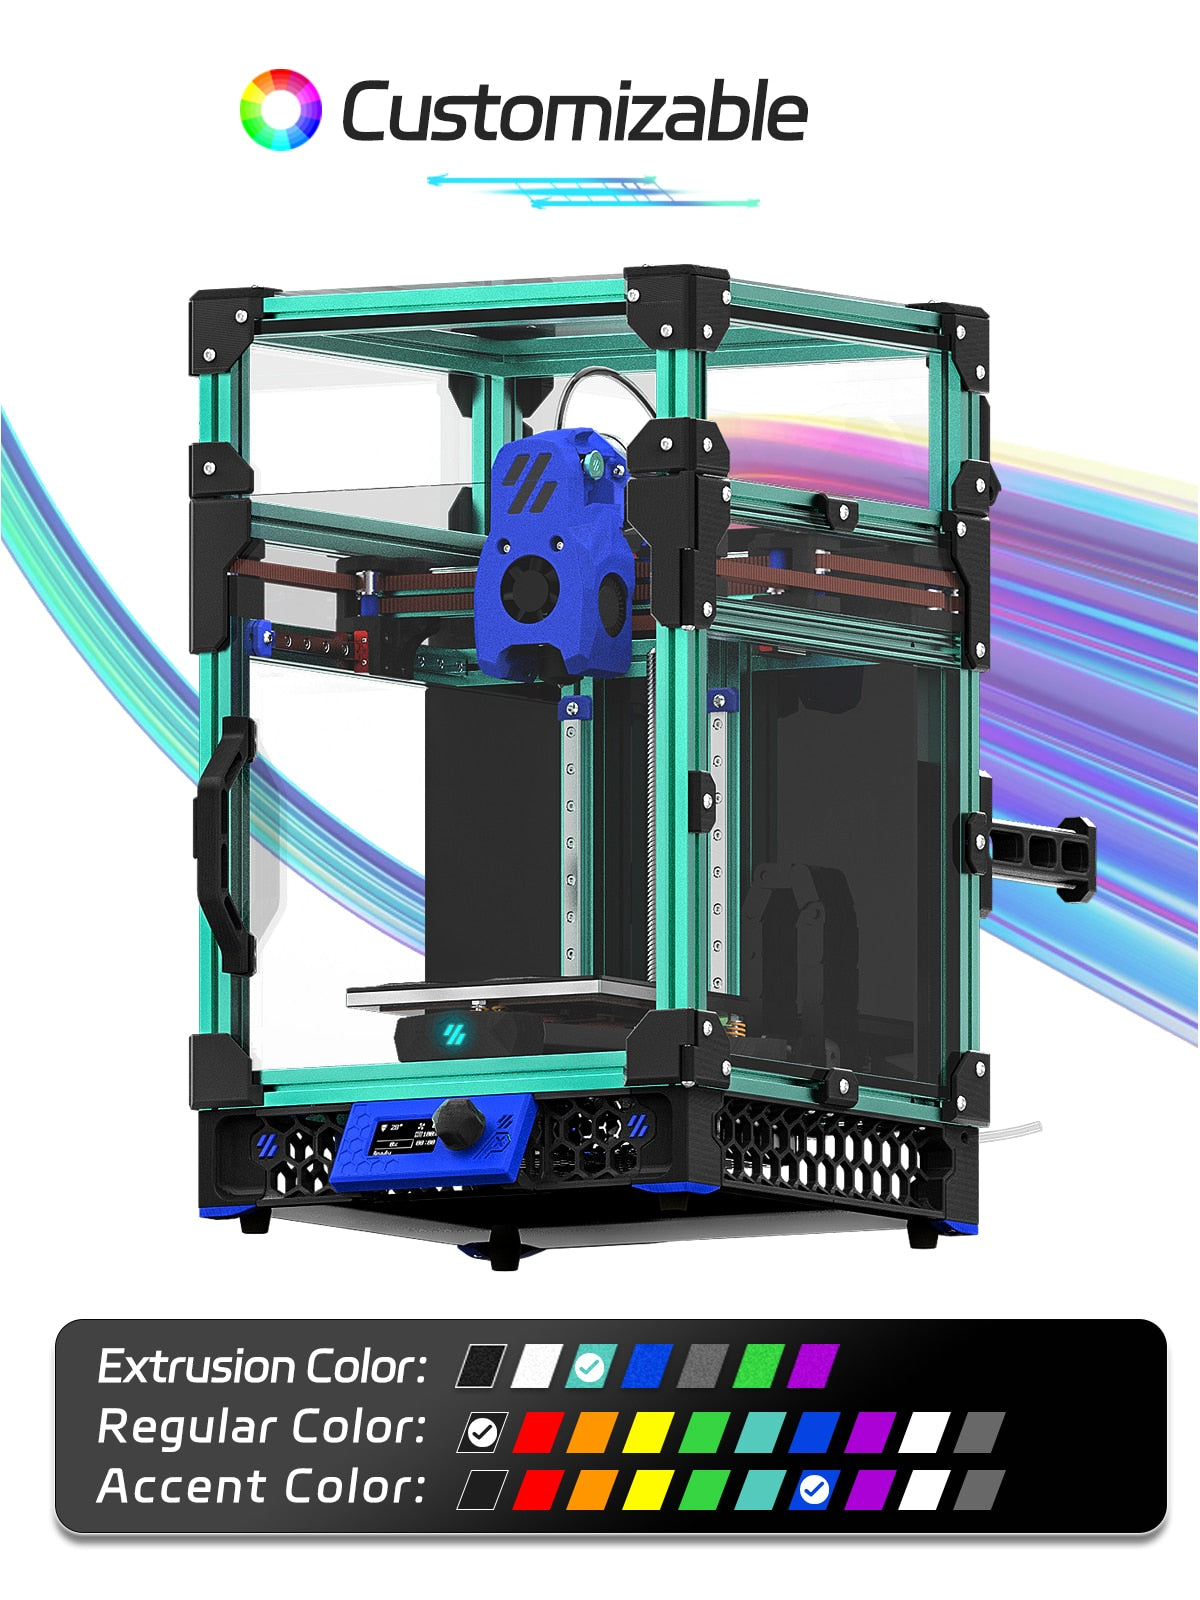 VORON 0.2 R1 Corexy 3D Printer Upgraded New SIBOOR V0.2 R1 [Aug,2023] MINI Stealthburner DIY 3D Printer Kit Support Klipper PI